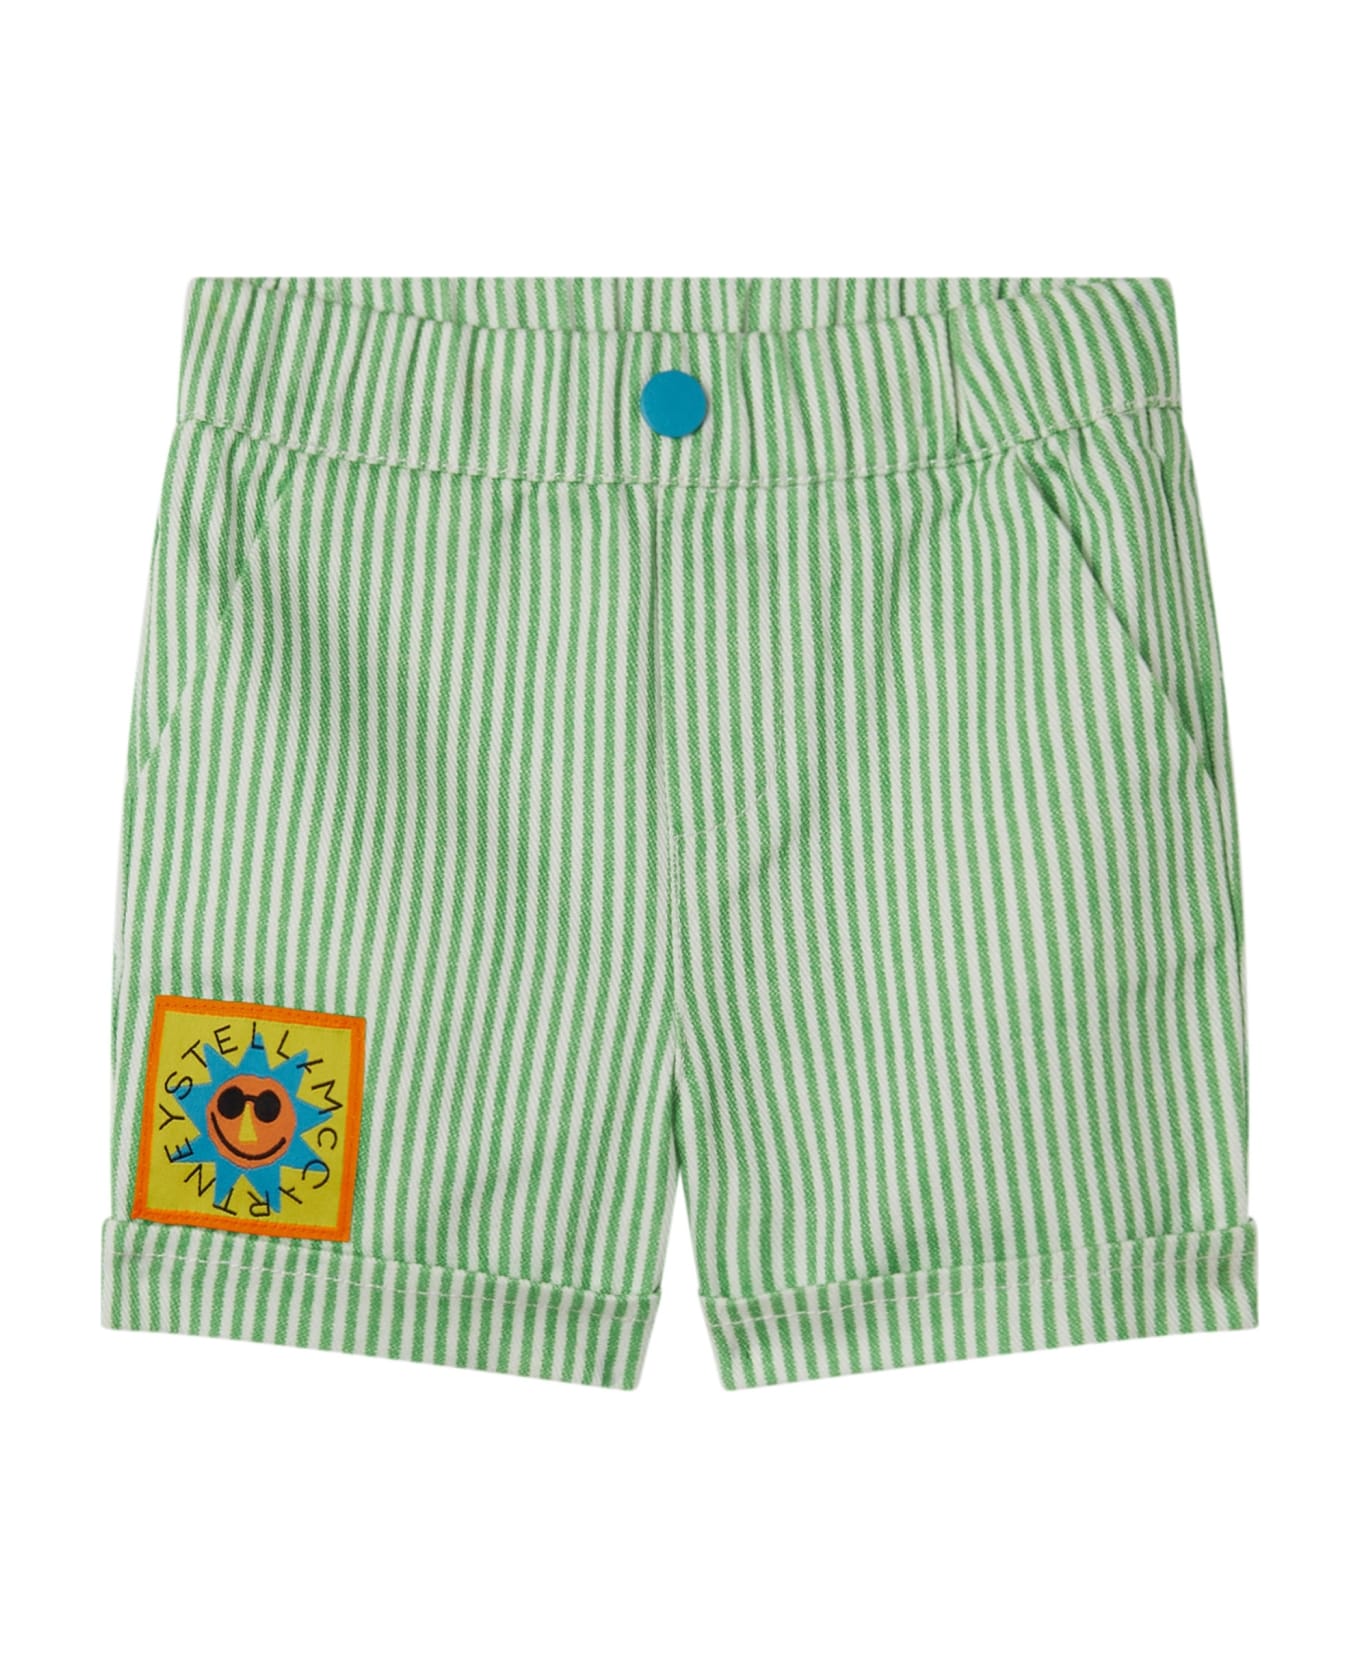 Stella McCartney Kids Sunshine Striped Shorts - White